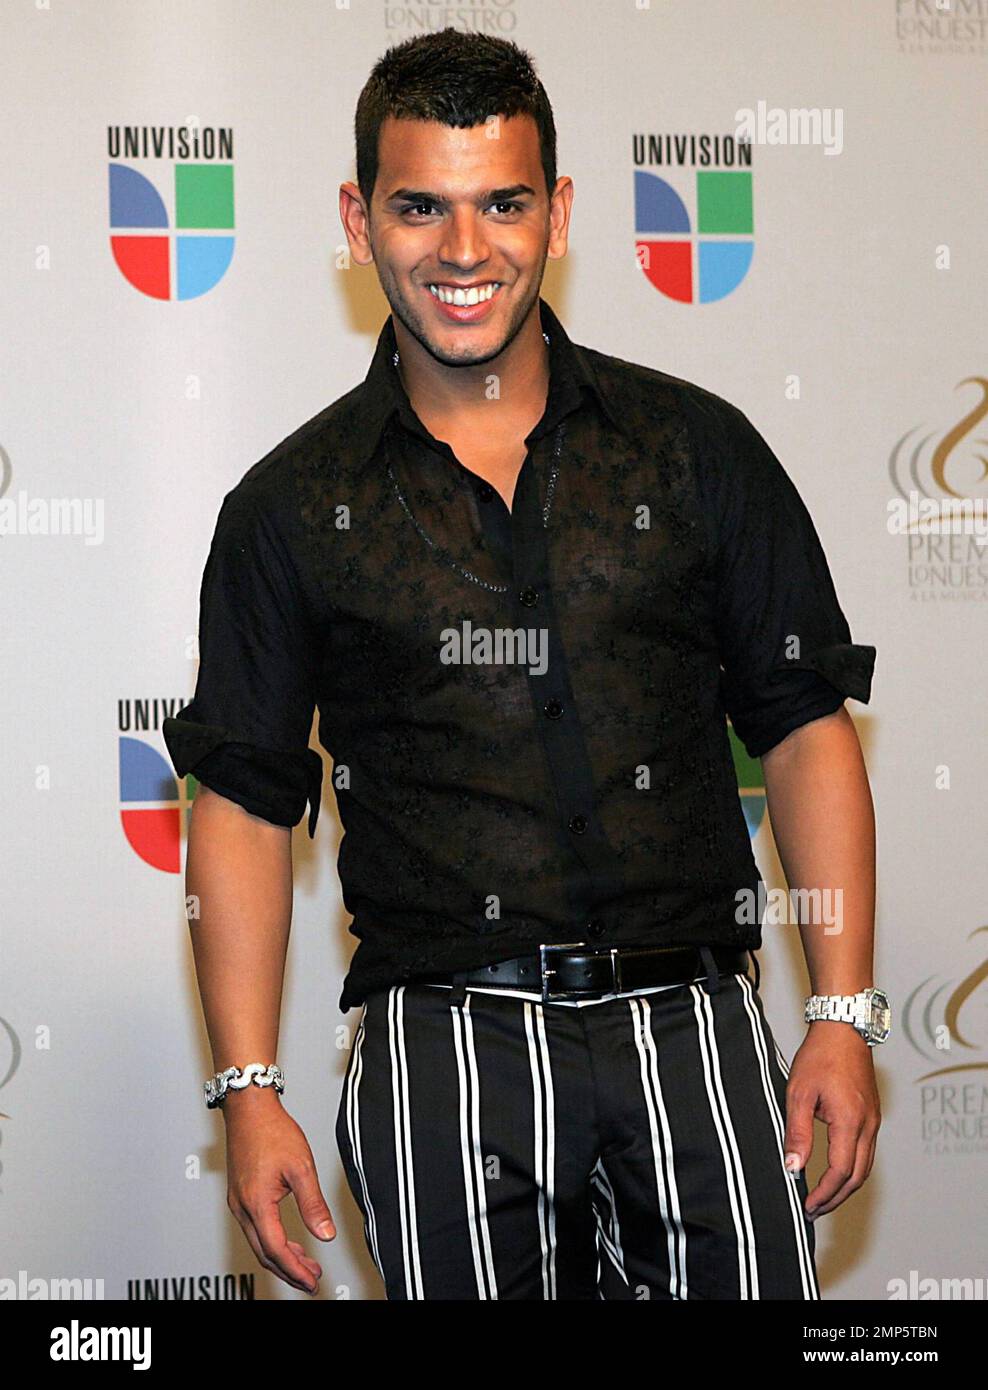 Tito El Bambino Appears Backstage At The 2010 Premio Lo Nuestro Award Show At American Airlines